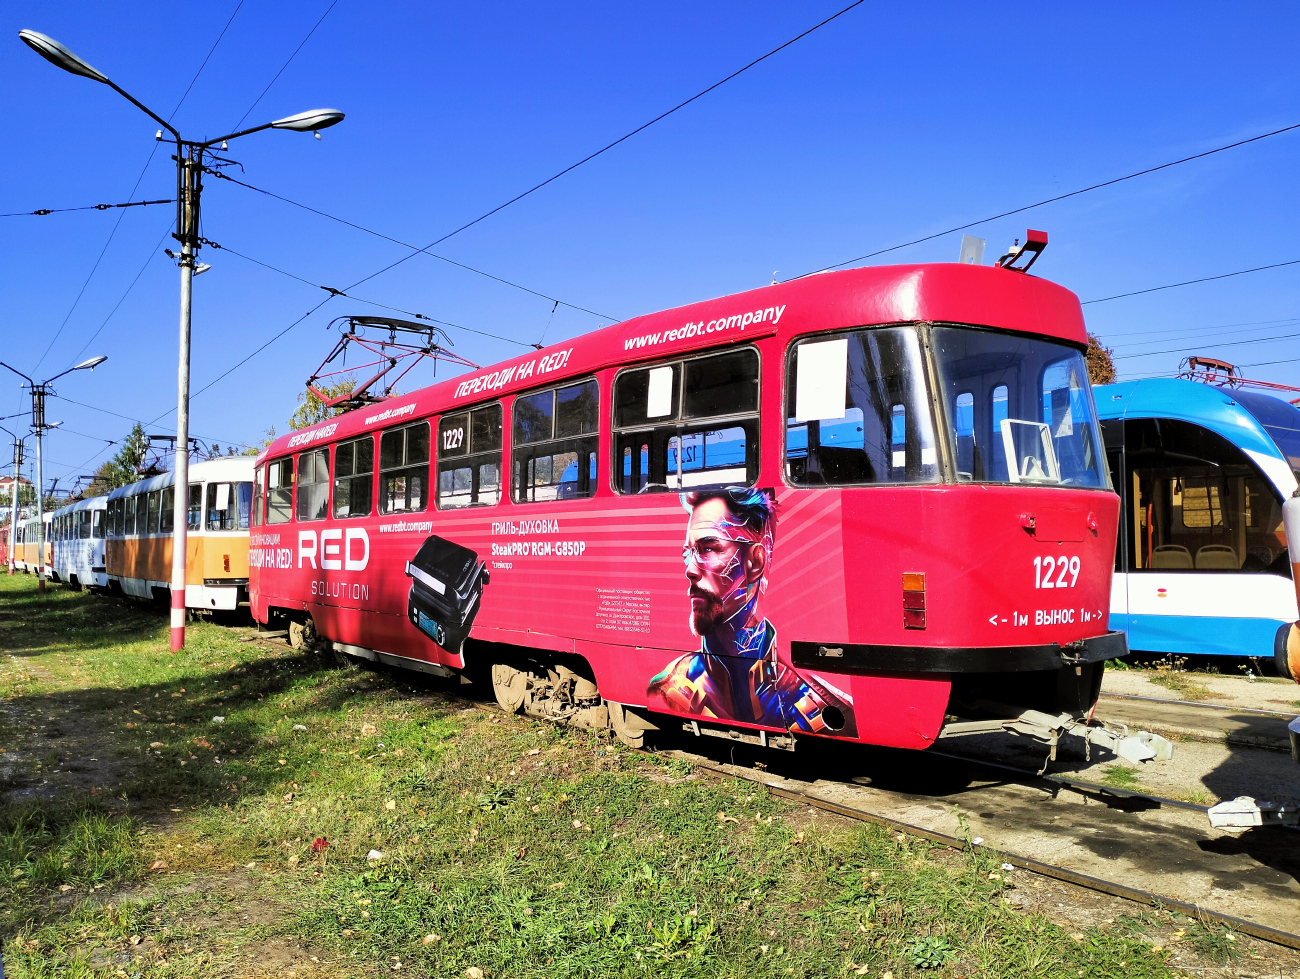 Ulyanovsk, Tatra T3SU # 1229